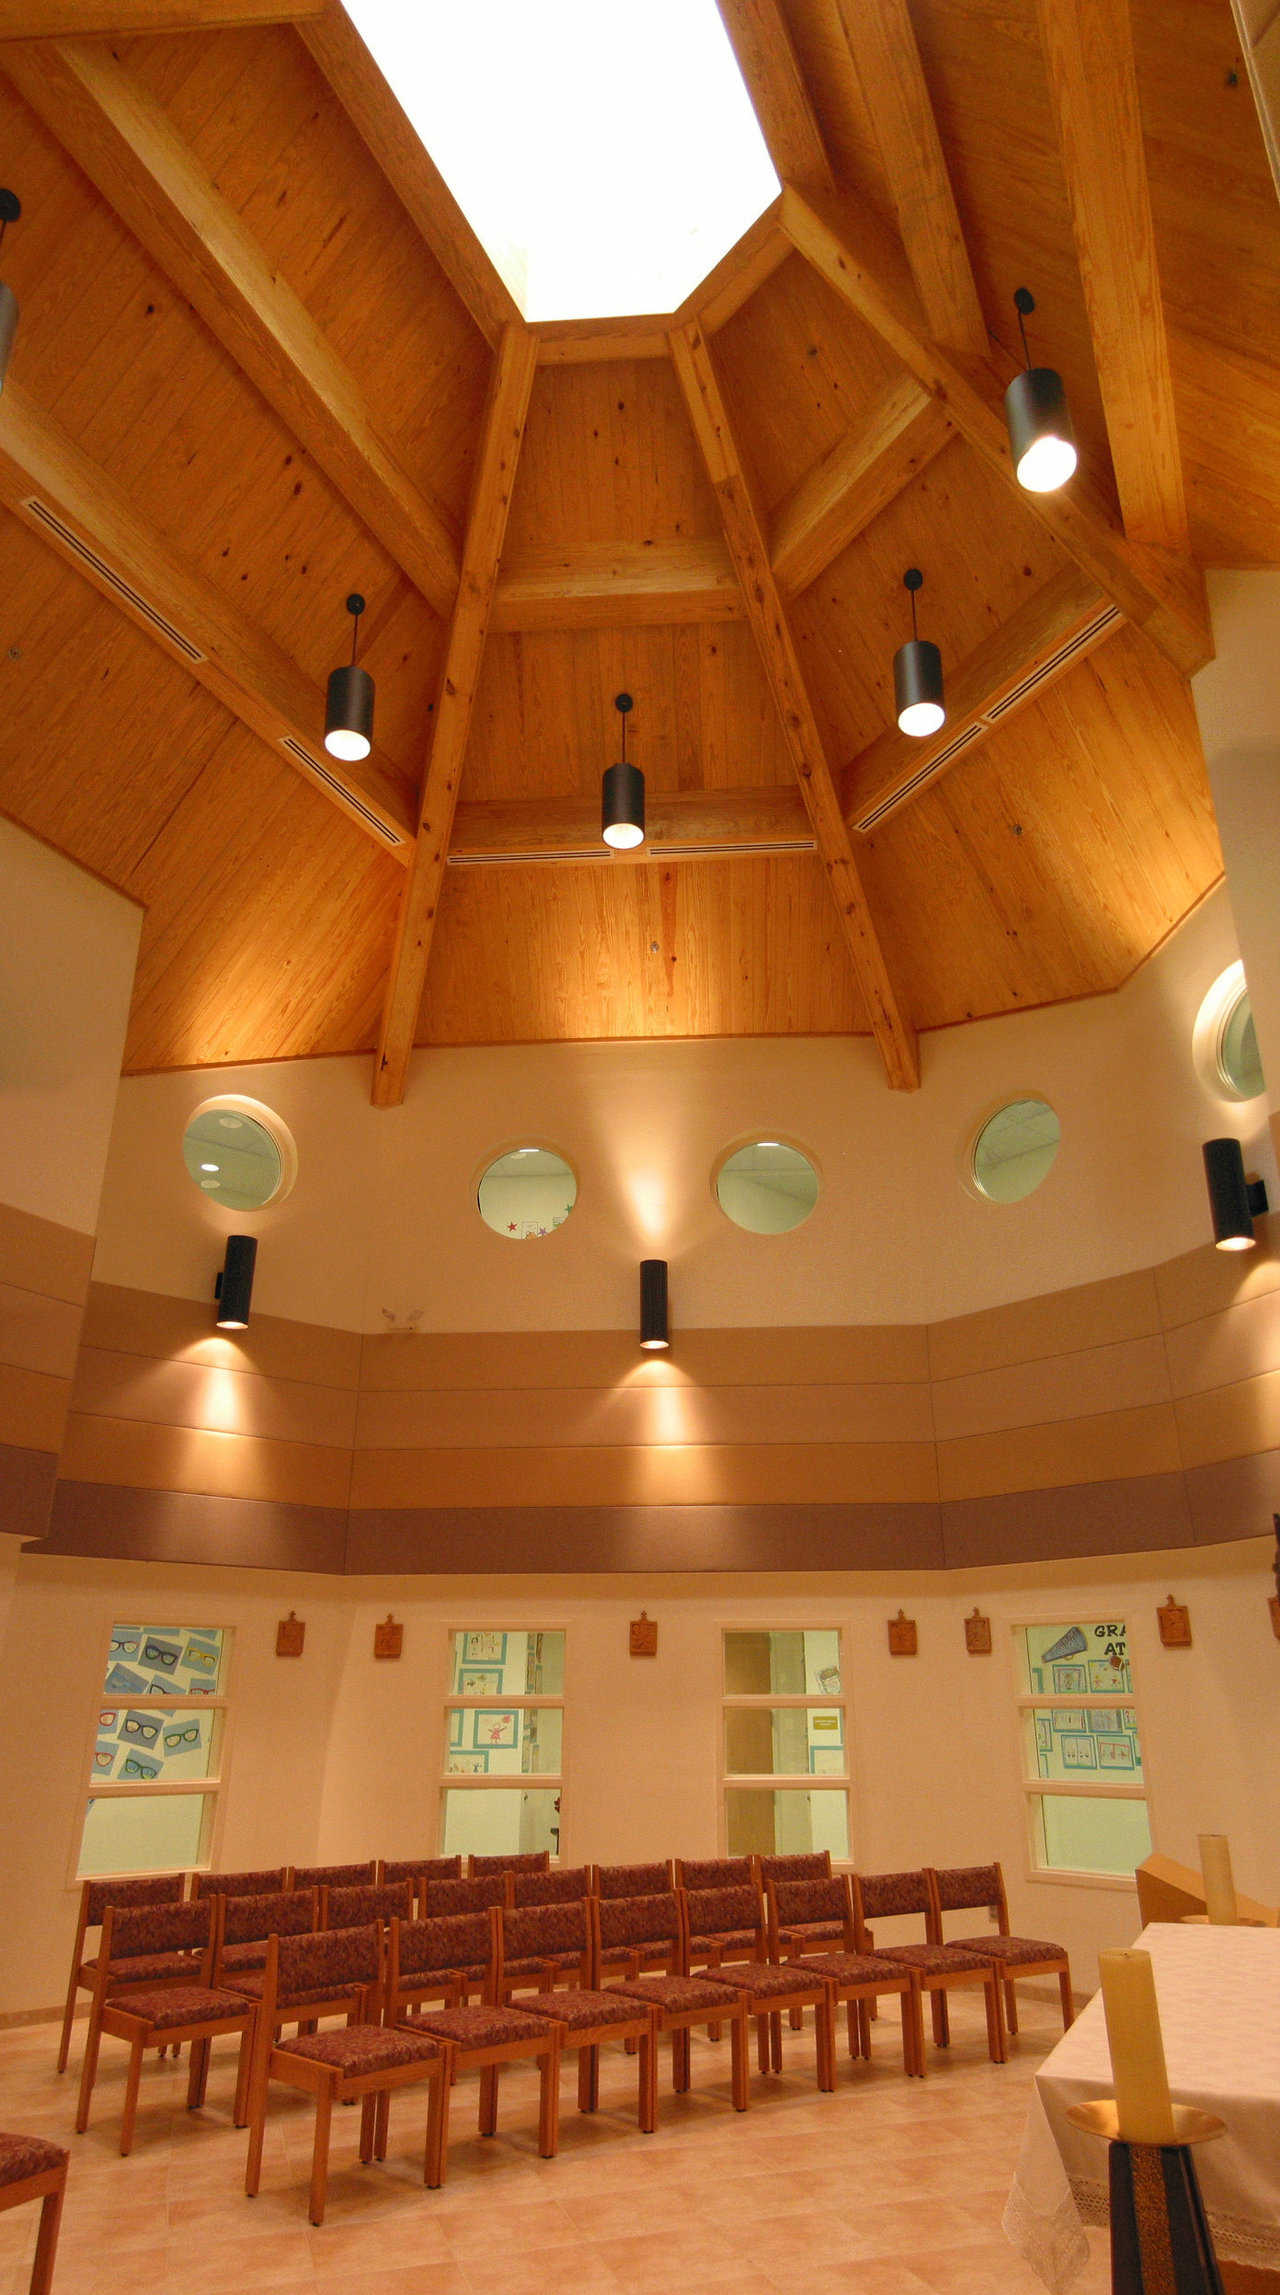 Roomy comfort — Windows, lighting and plenty of space make the domes functional and enjoyable.